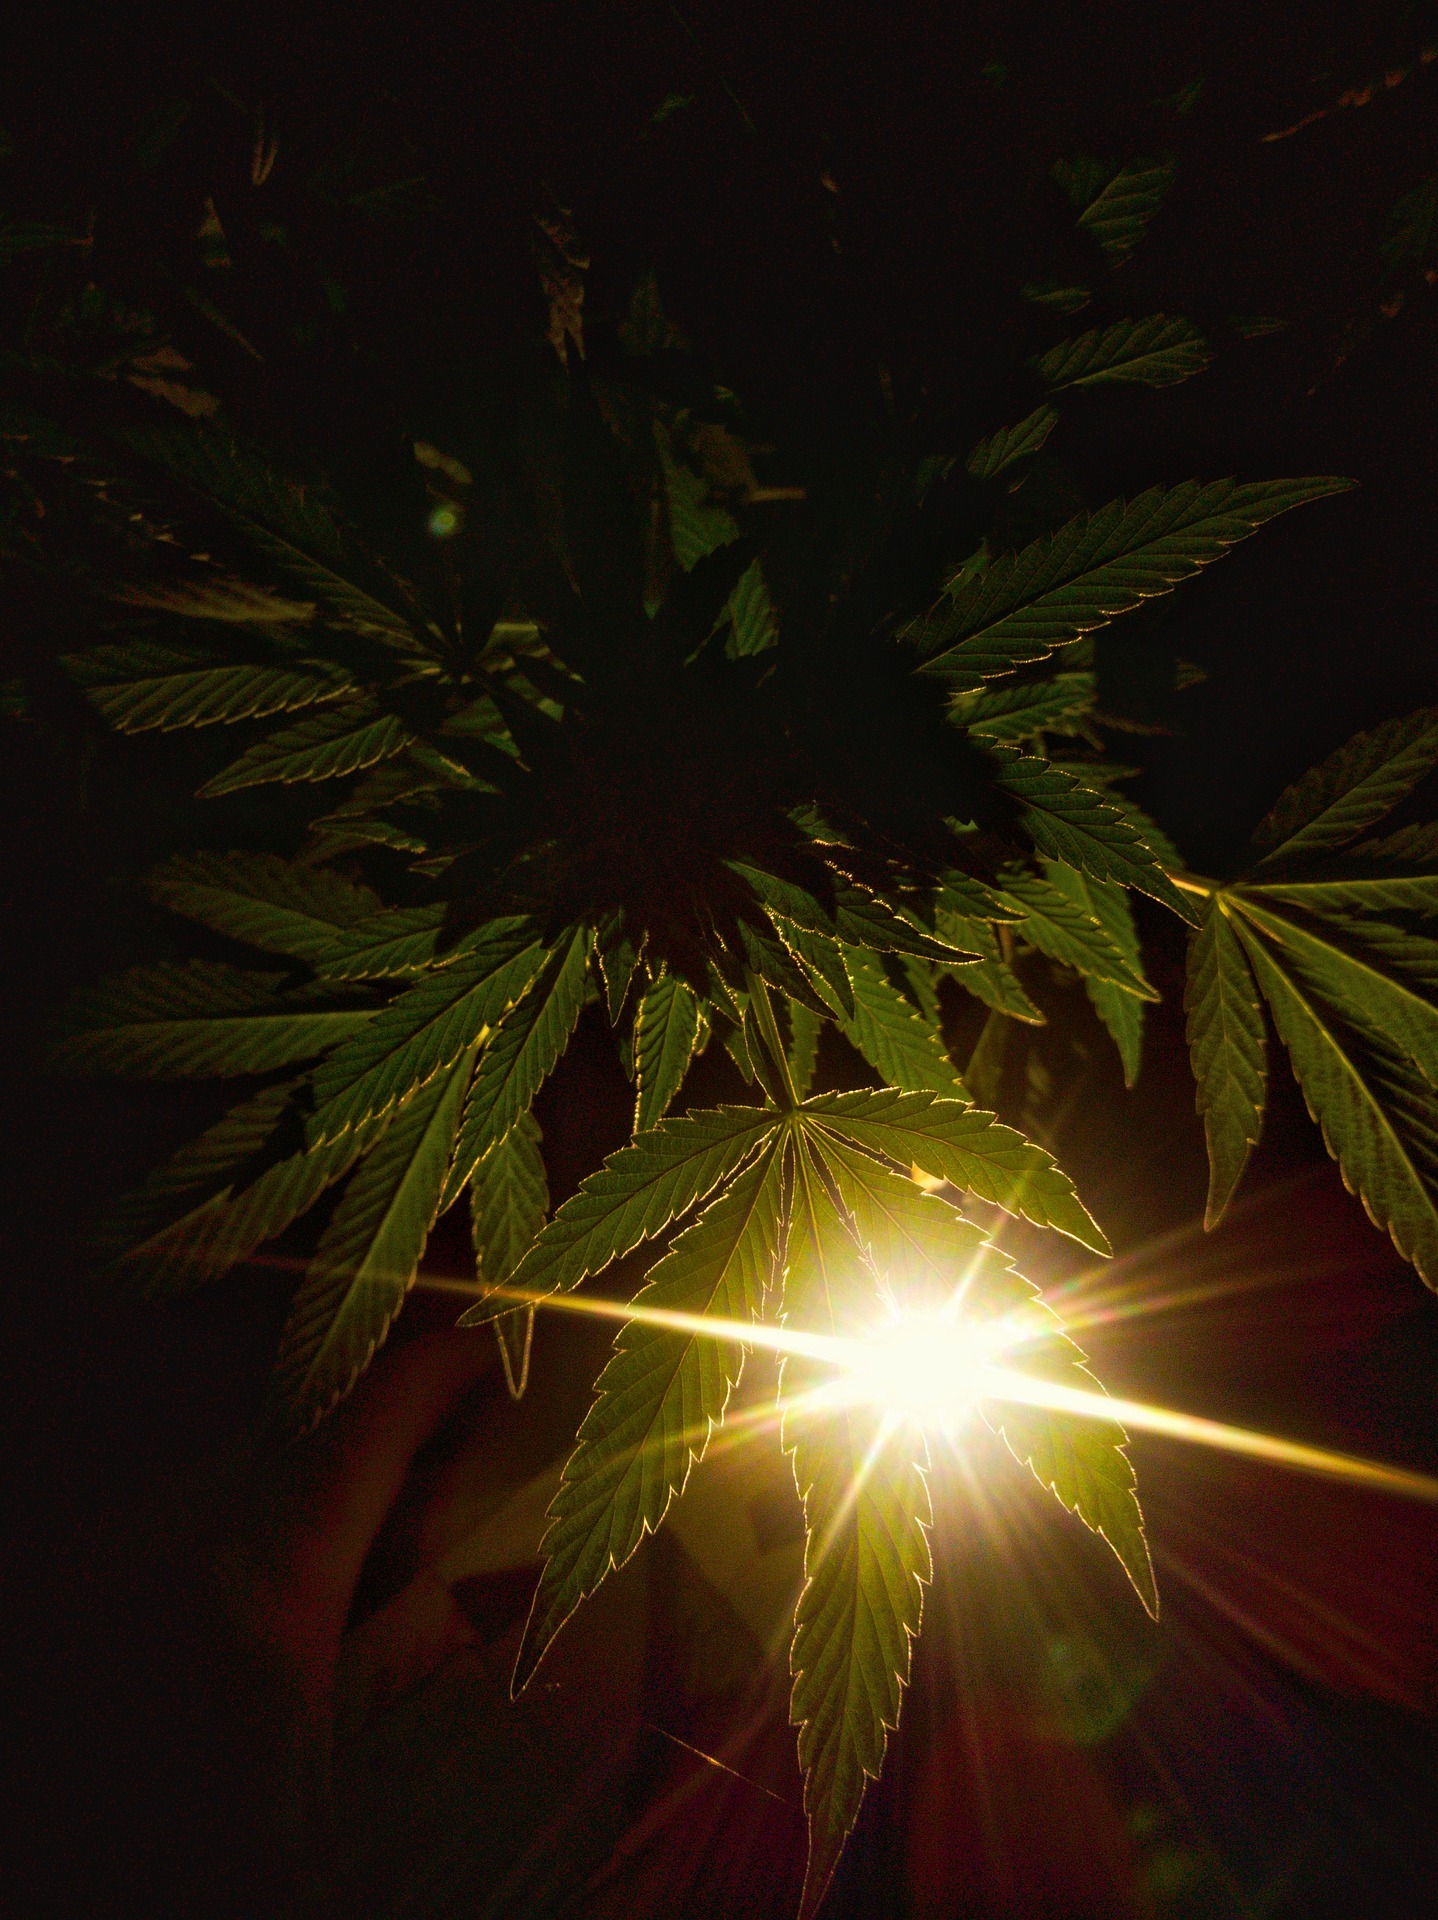 U.S. Marijuana Legalization has Murky Influence at Home and Abroad